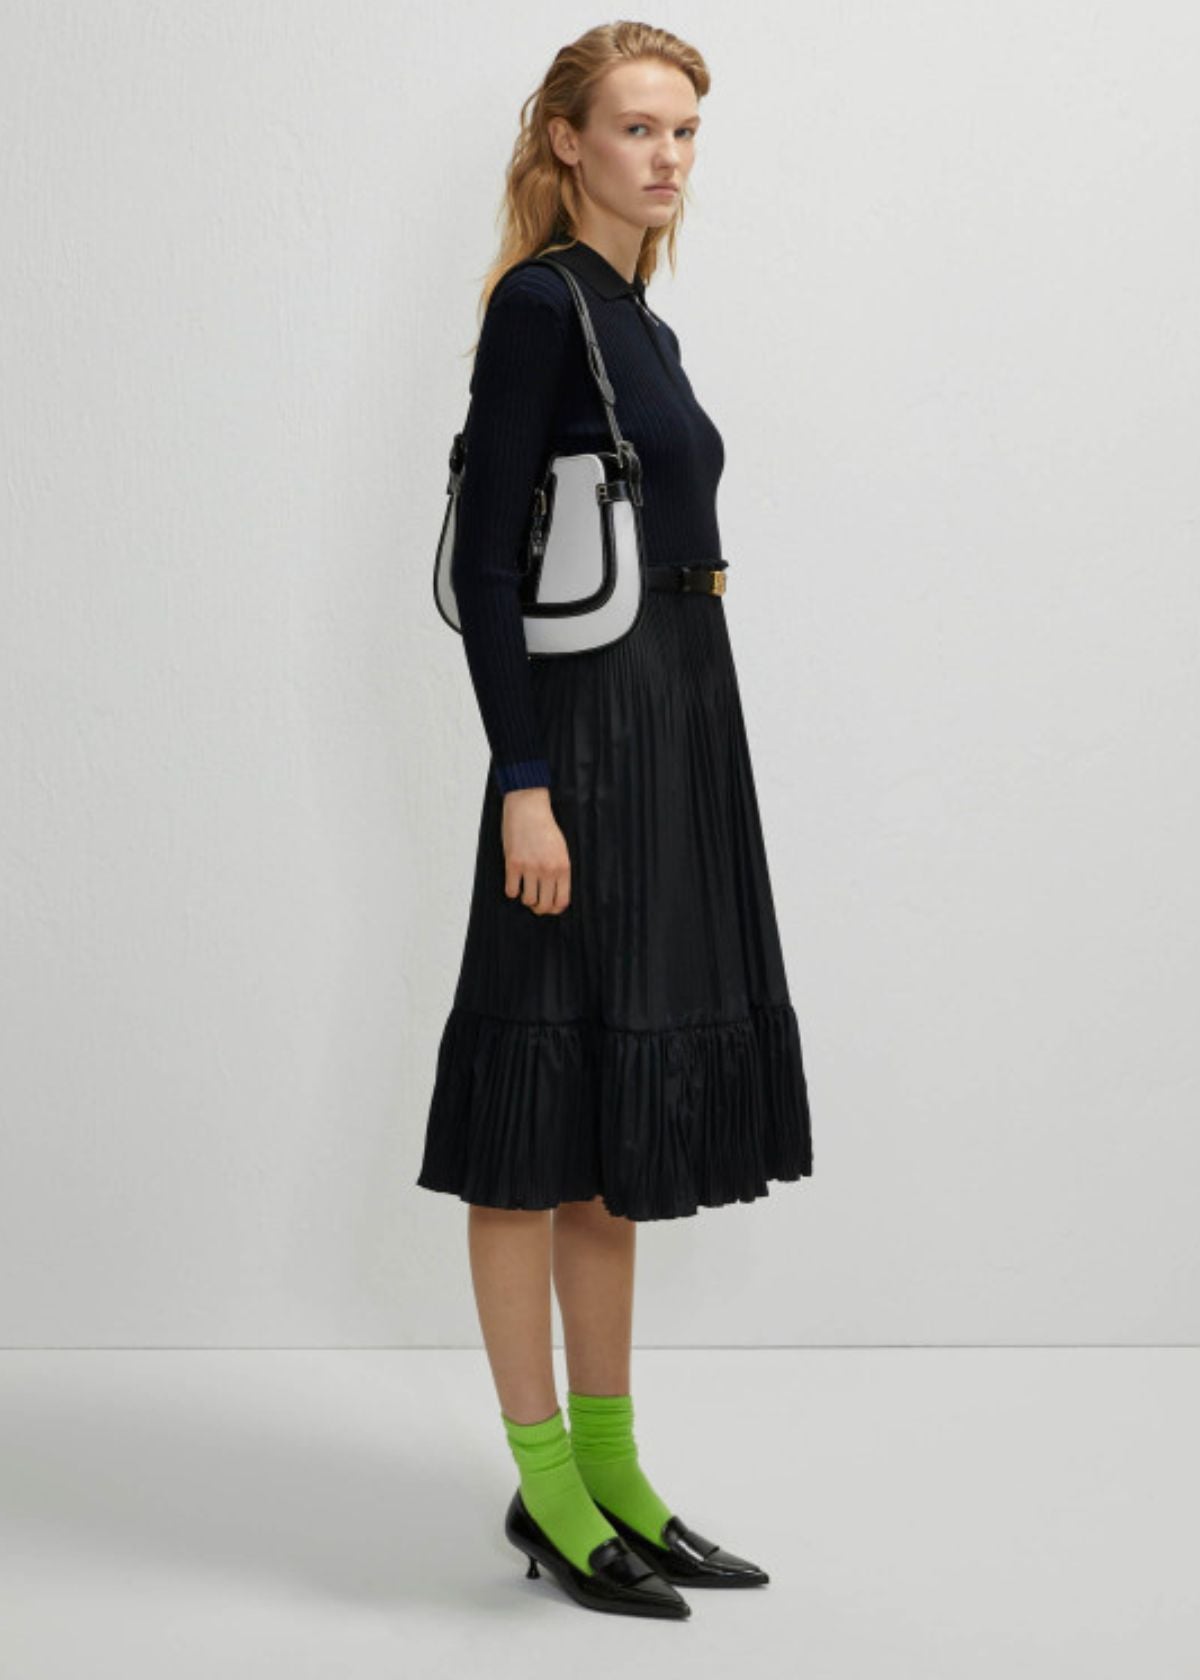 BEATRICE B. Knit Dress with Taffeta Skirt - Black